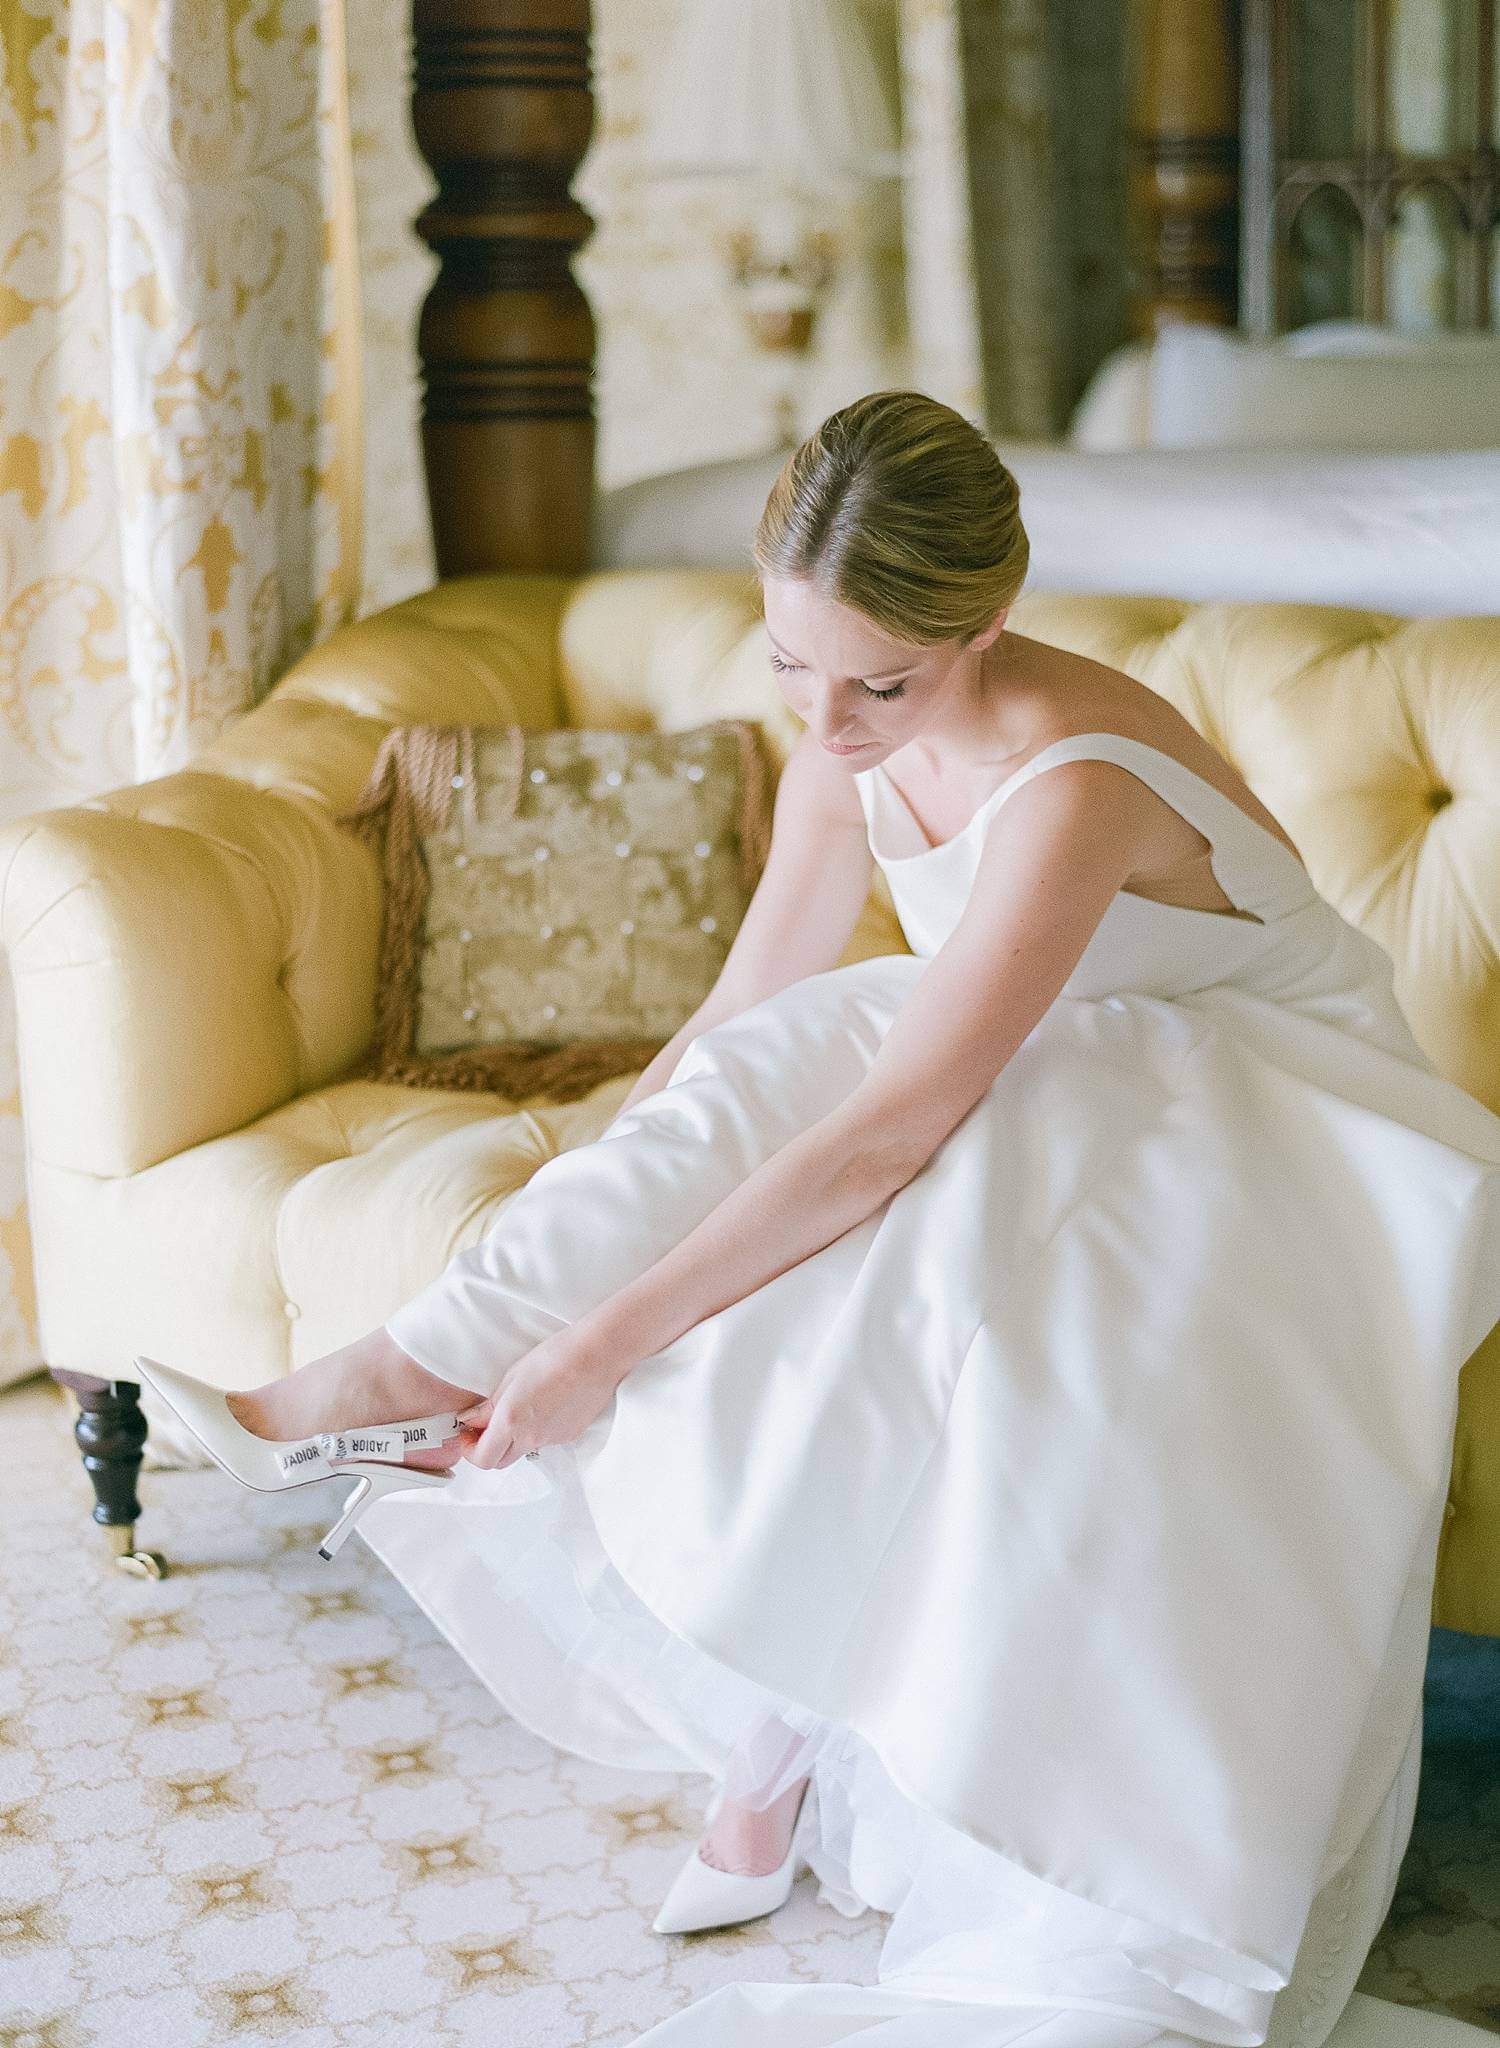 Bride slipping her Dior heels on for her wedding.